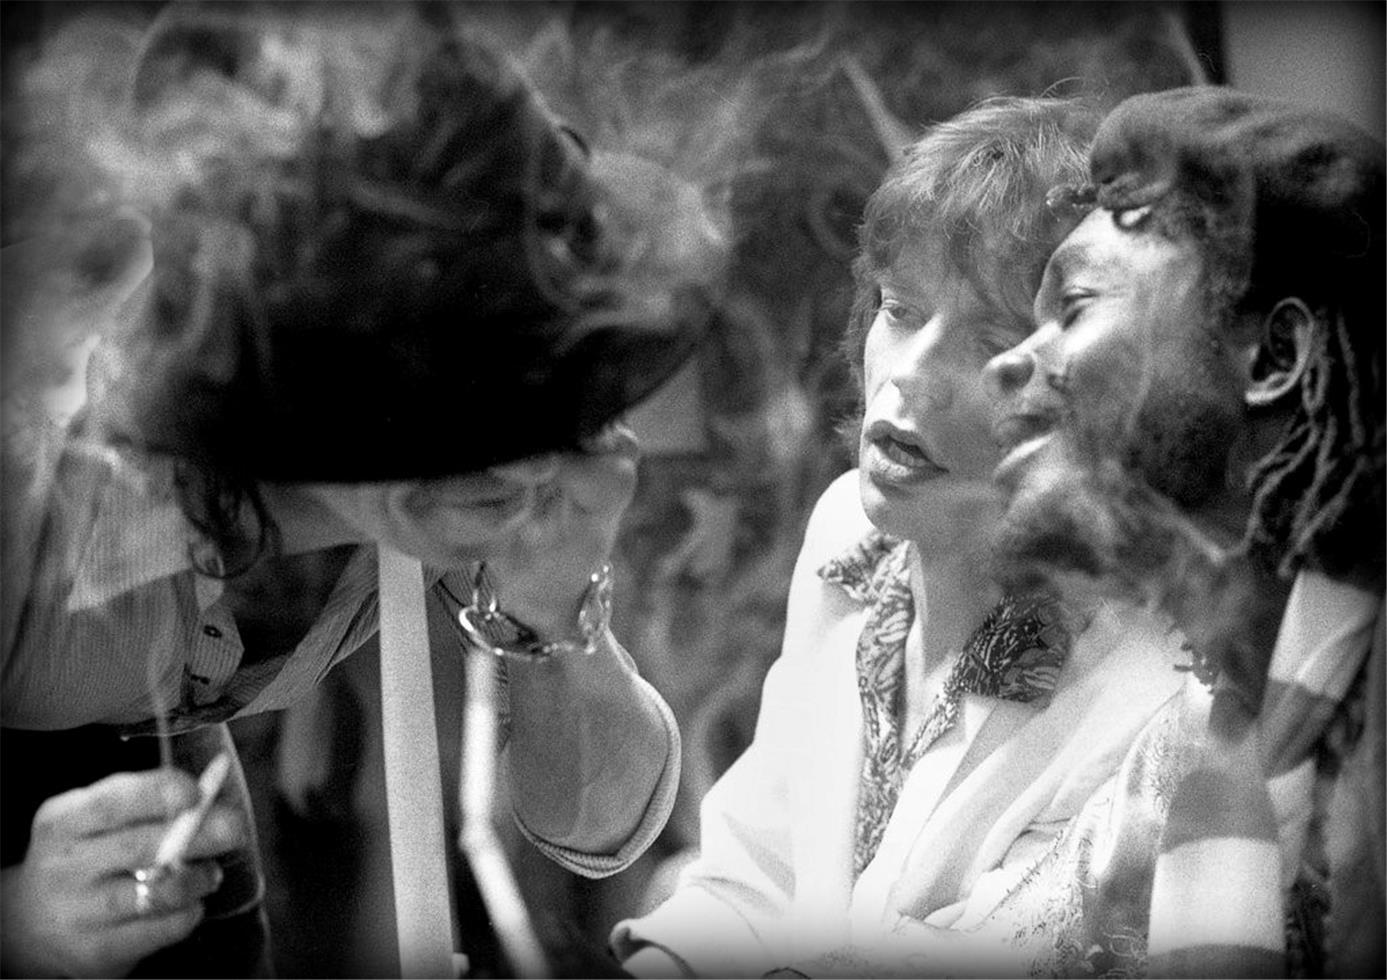 Peter Simon Portrait Photograph - Keith Richards, Mick Jagger, and Peter Tosh, 1978